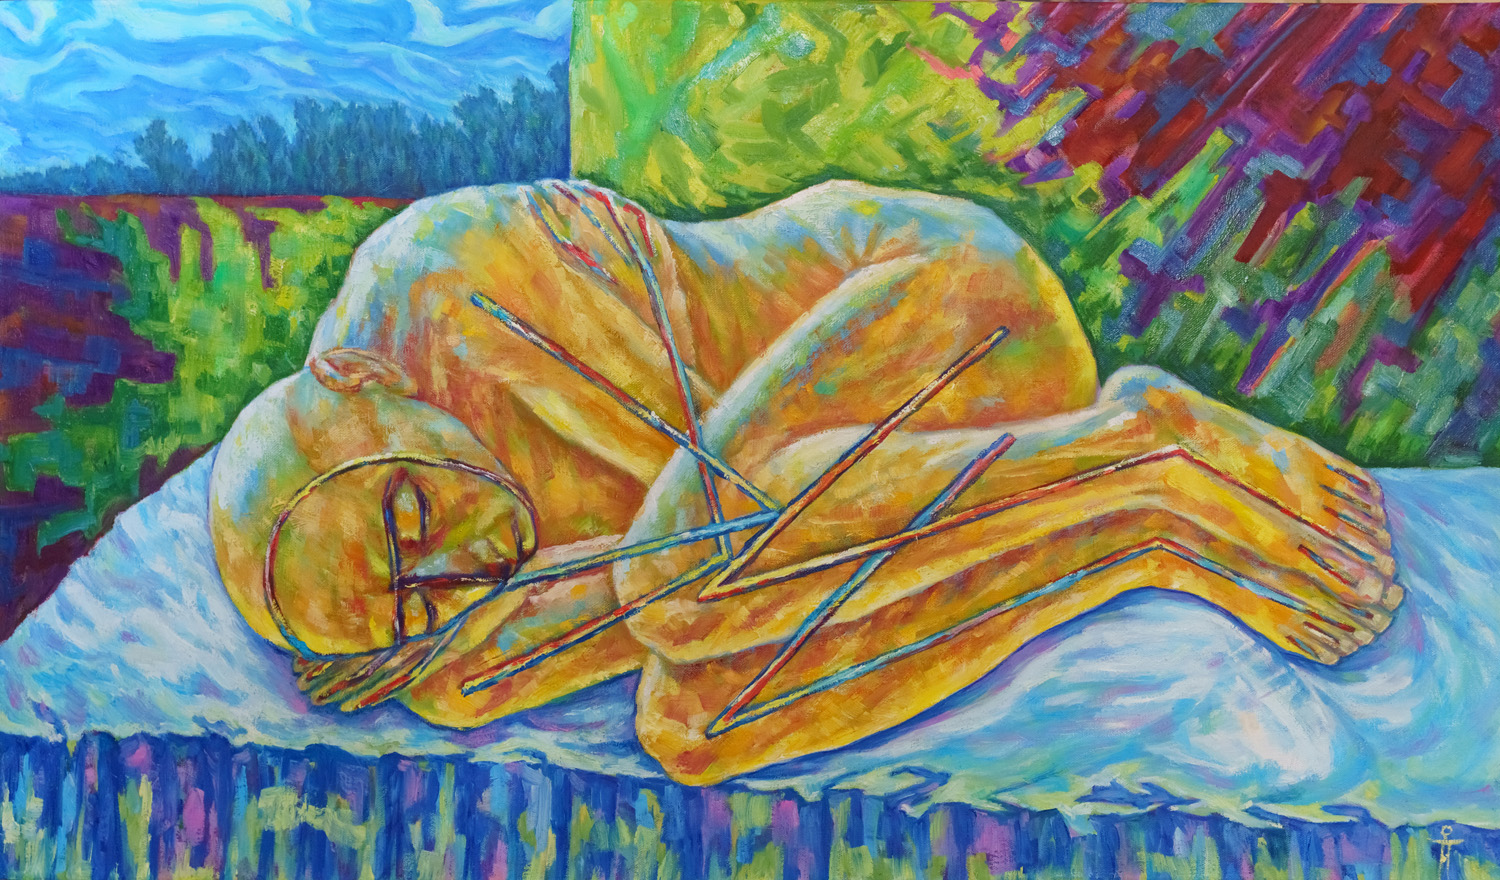 "Sleep" - by Yuriy Nemish